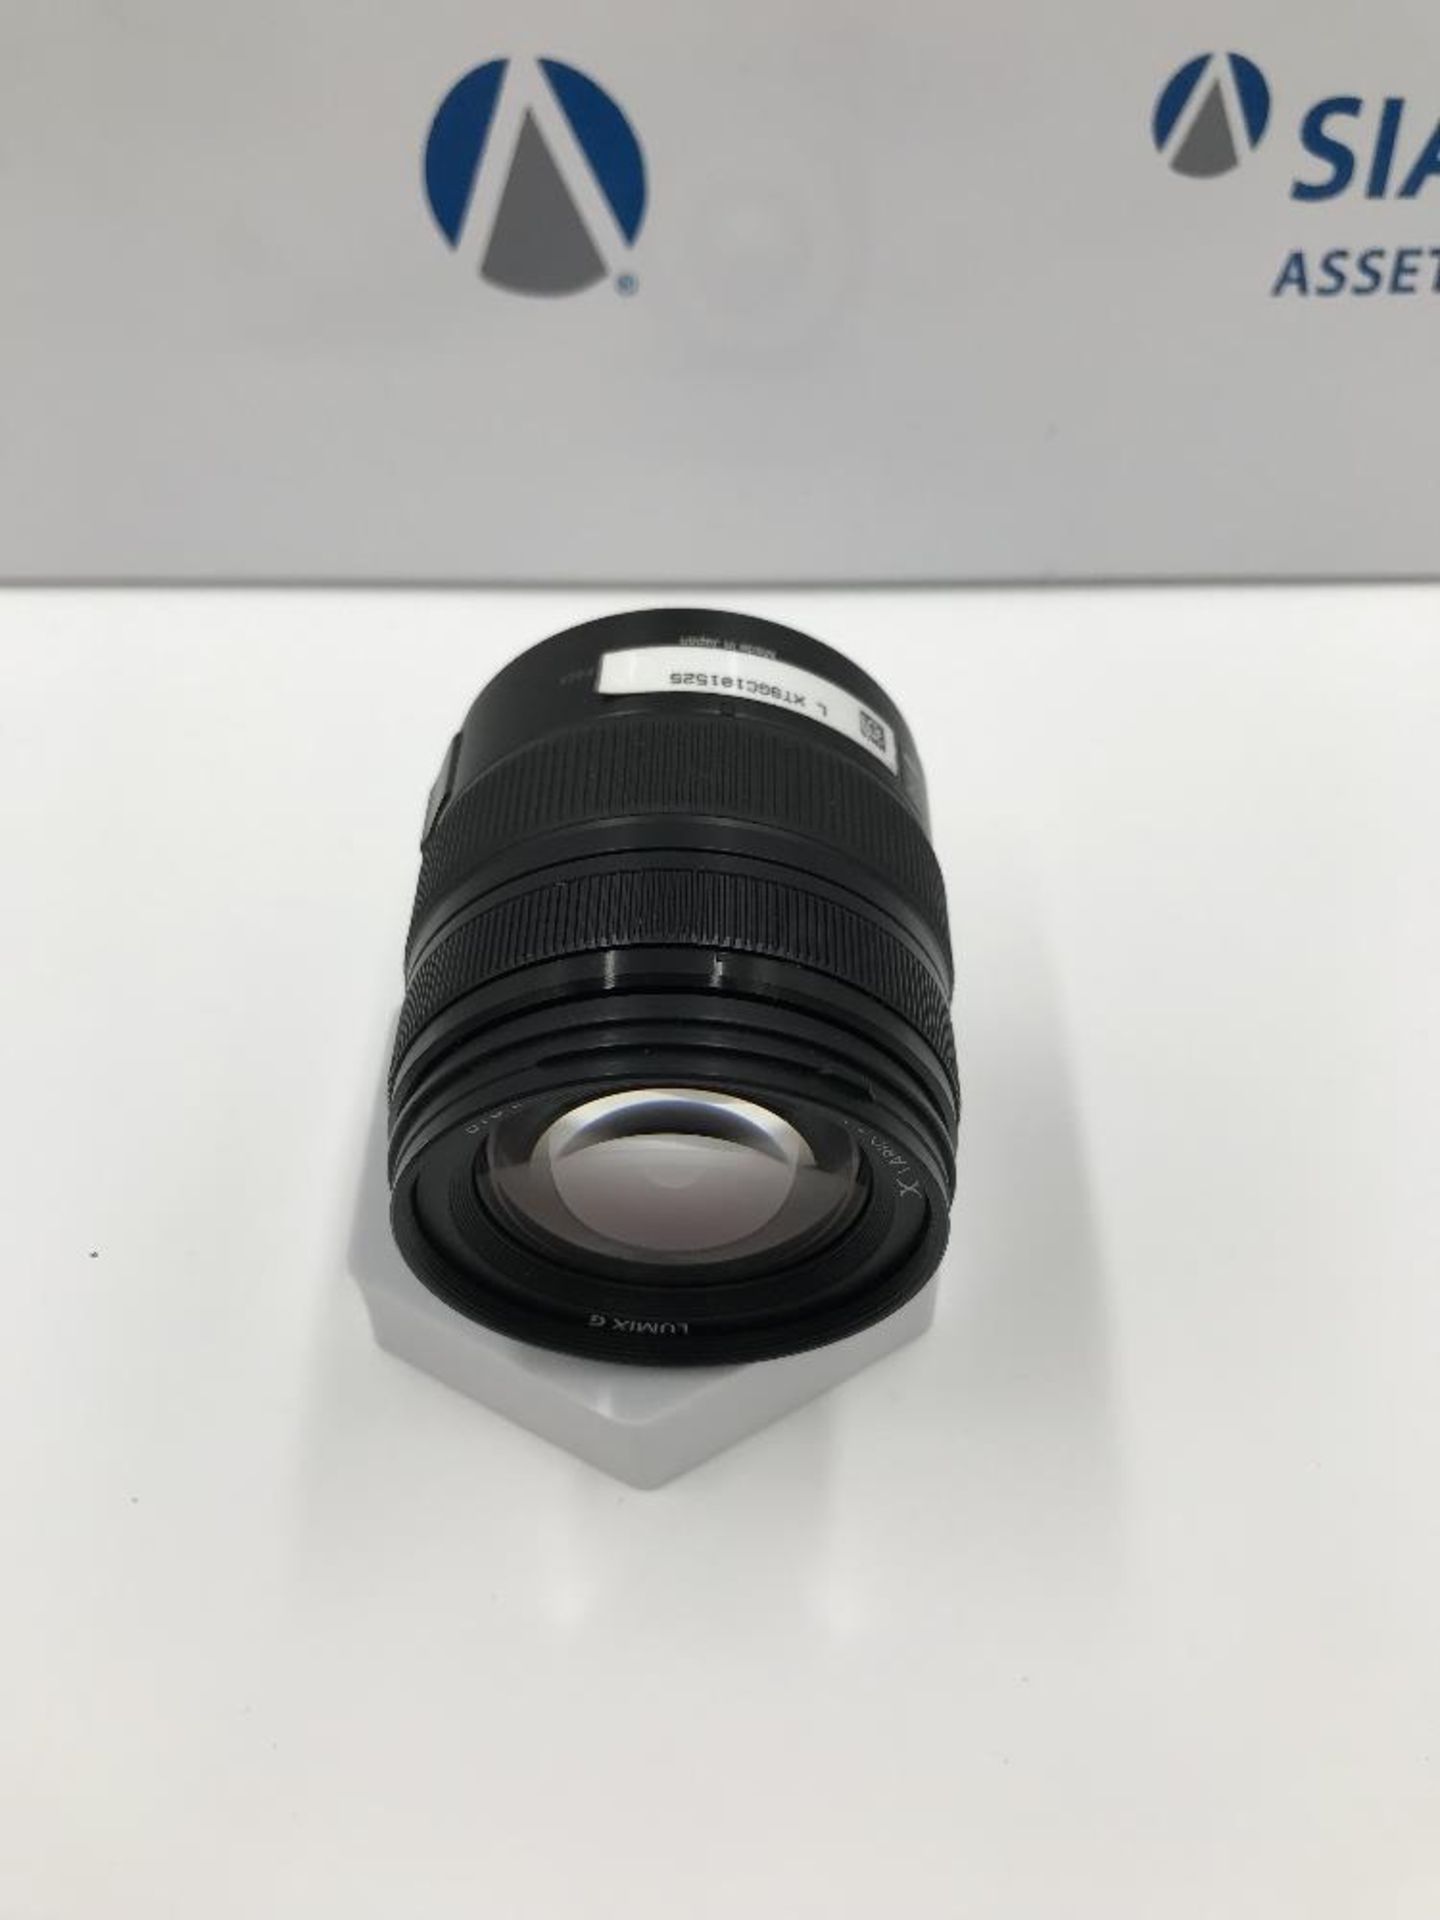 Panasonic Lumix G X Vario 1:2.8/12-35mm ASPH Power O.I.S. Zoom Lens & H-HS12035 Lens Hood - Image 7 of 7